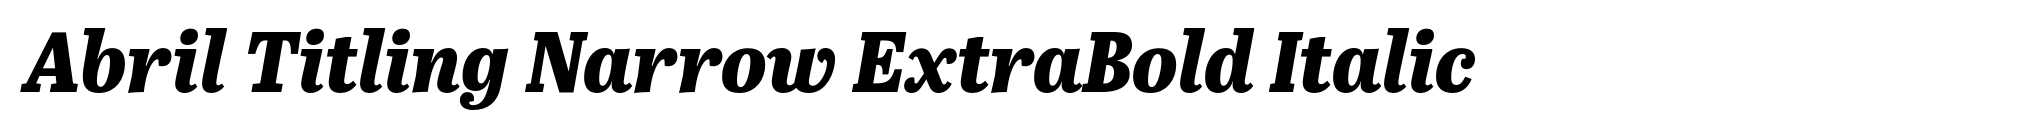 Abril Titling Narrow ExtraBold Italic image